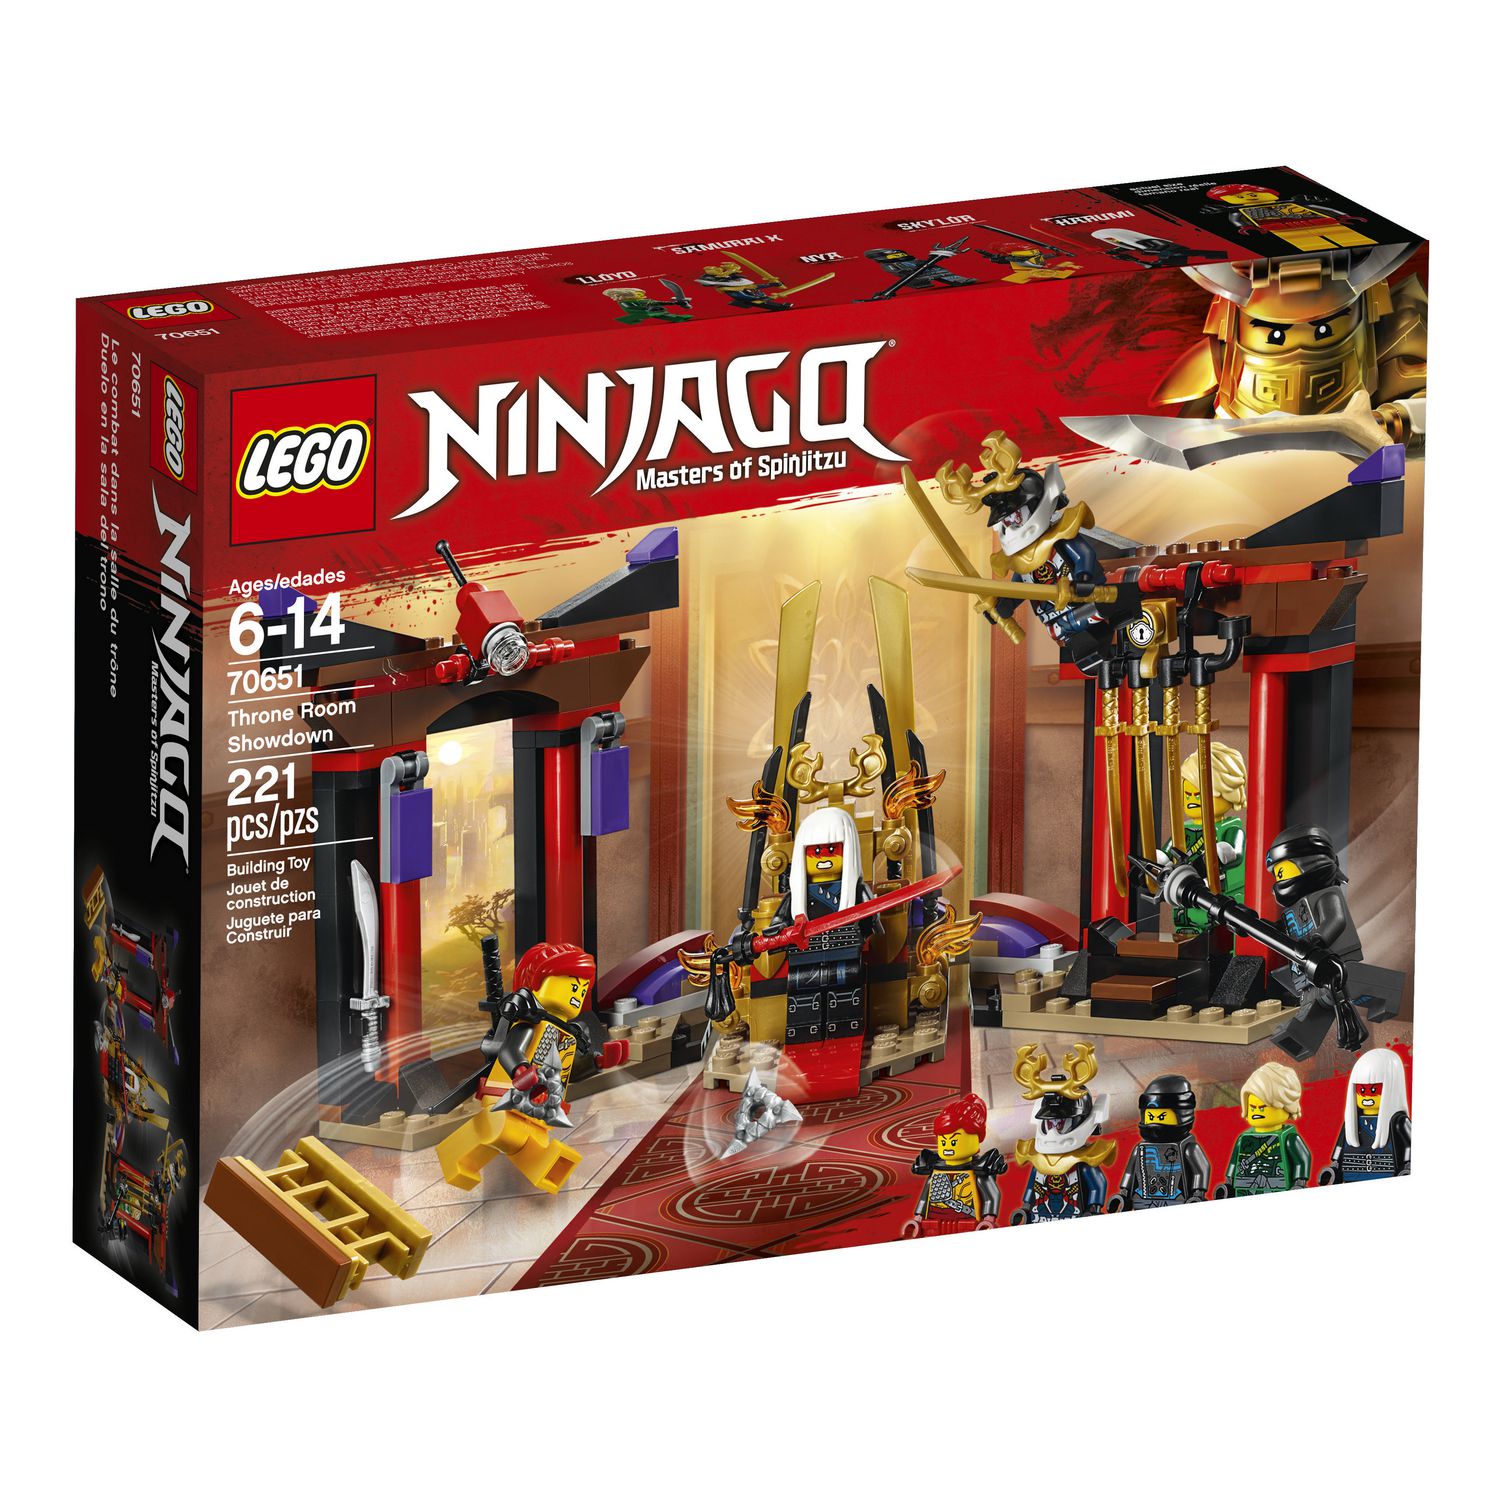 LEGO NINJAGO Masters of Spinjitzu: Throne Room Showdown 70651